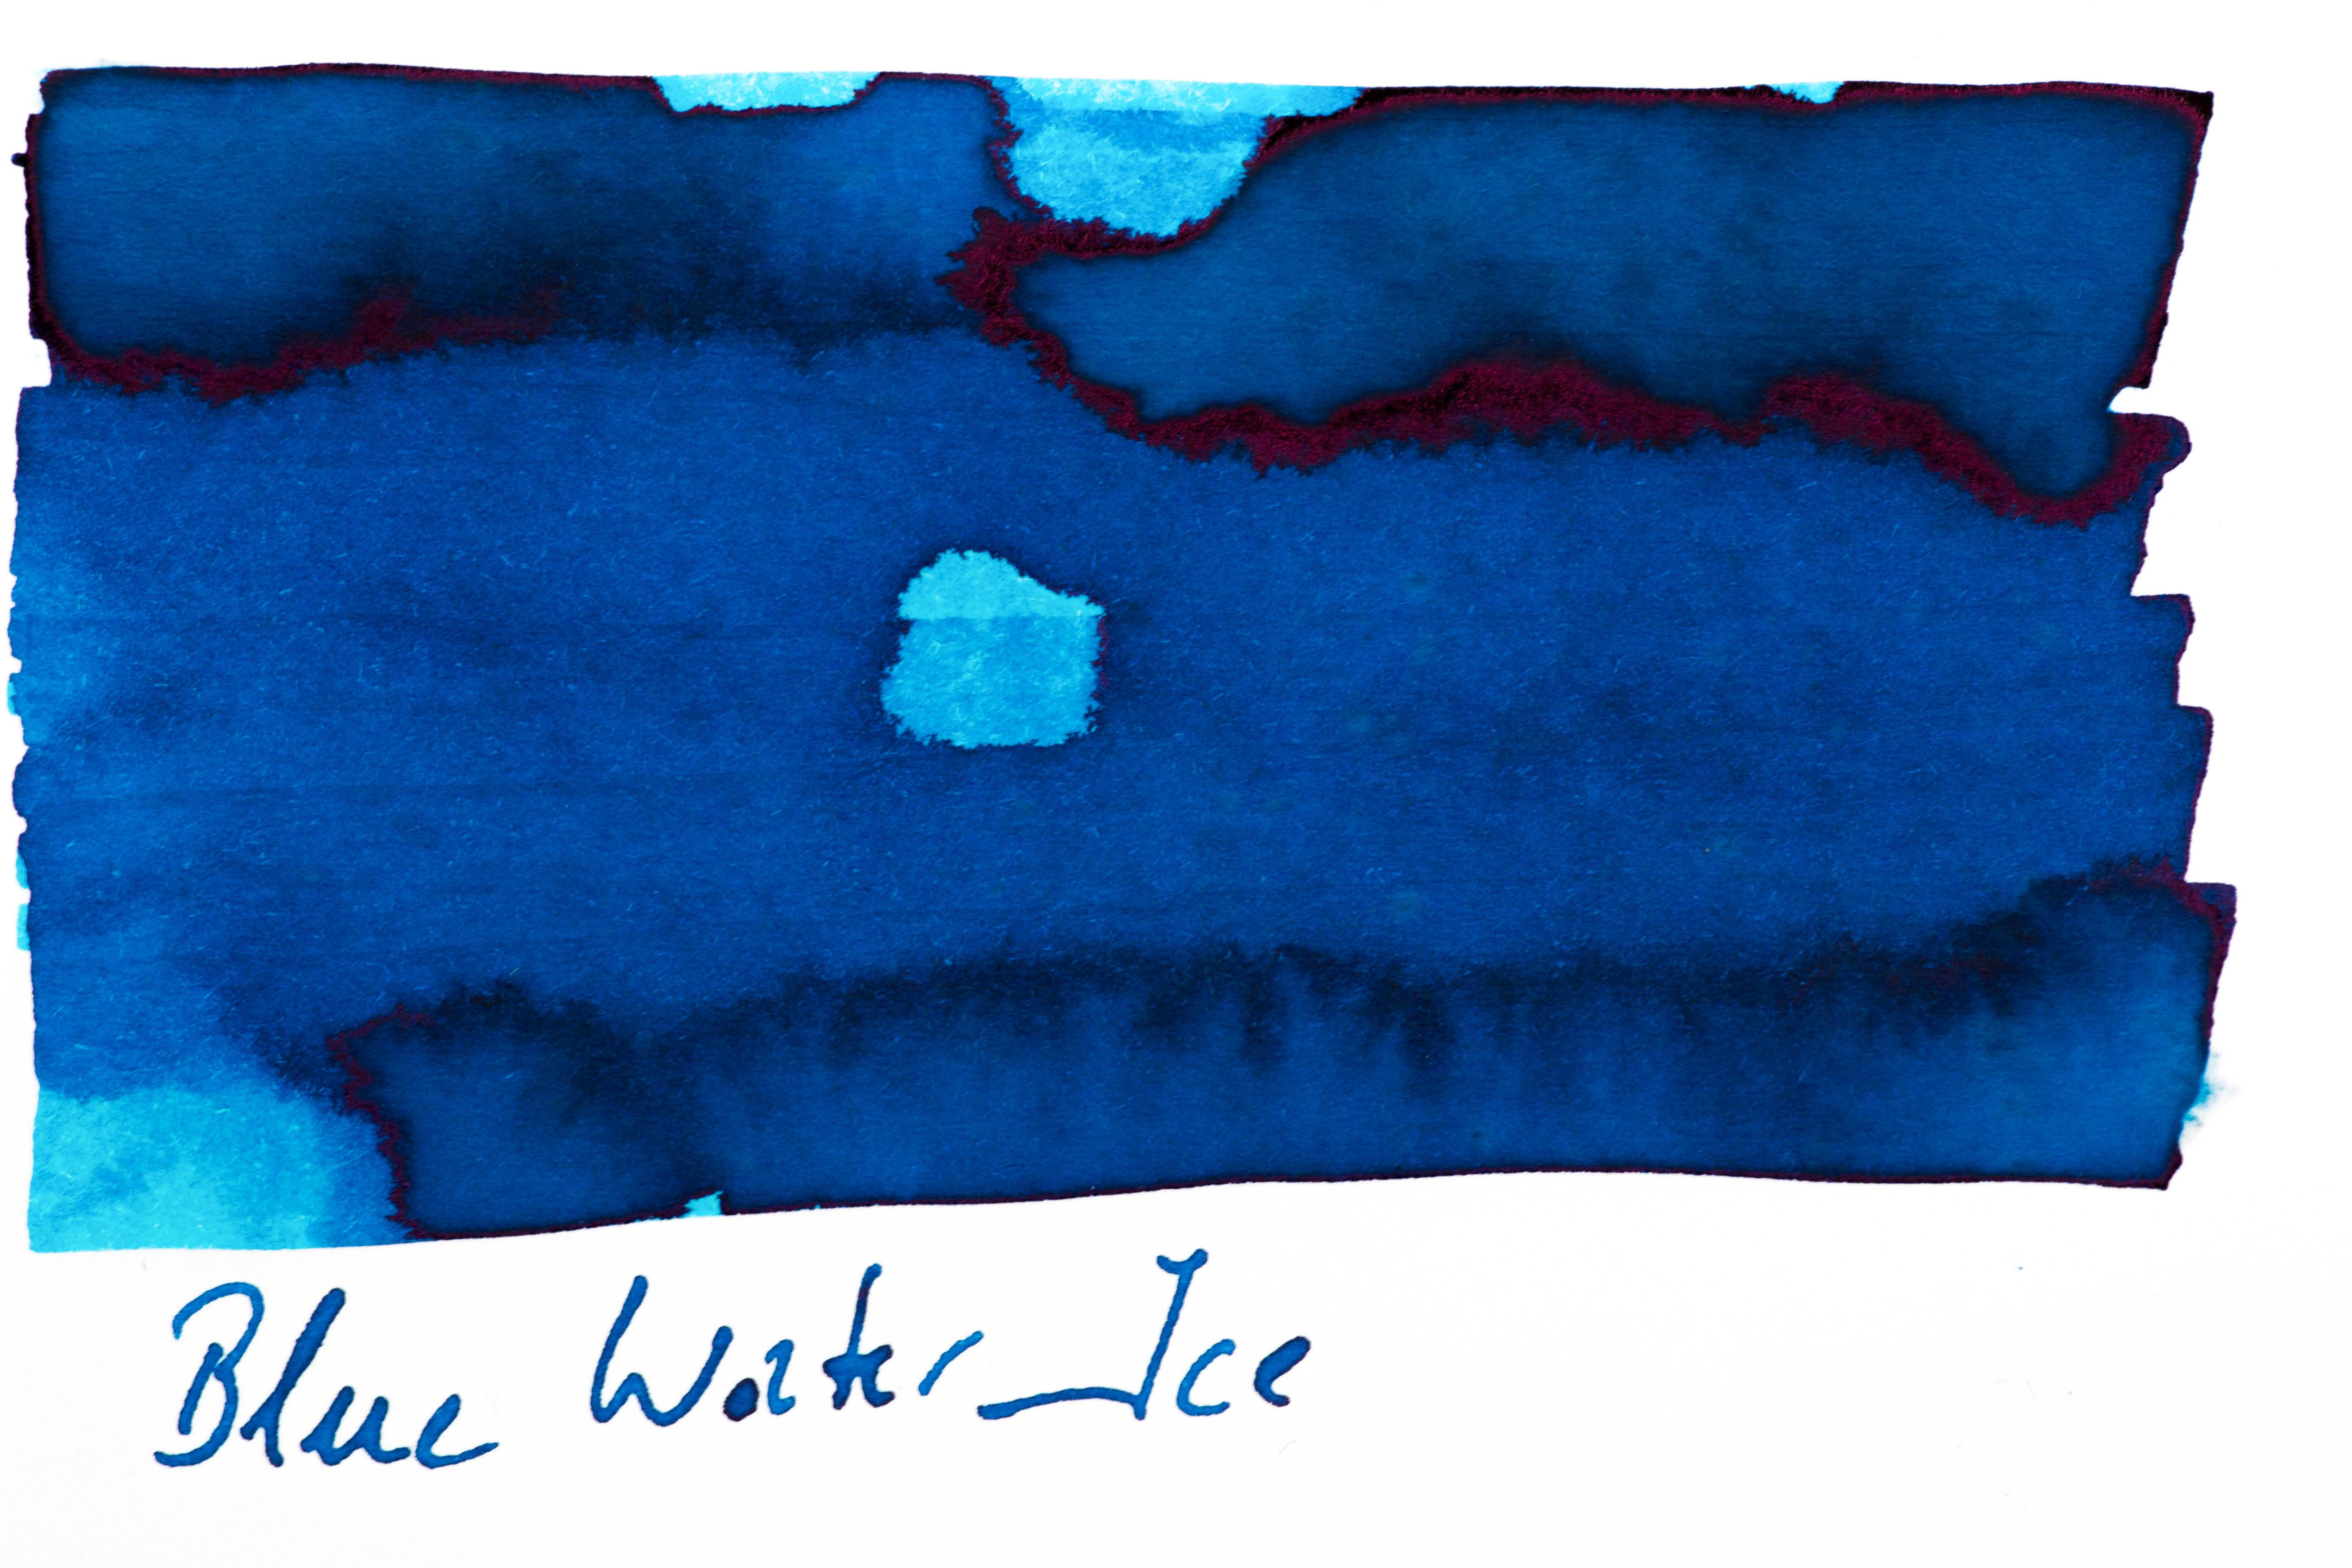 Robert Oster - Blue Water Ice